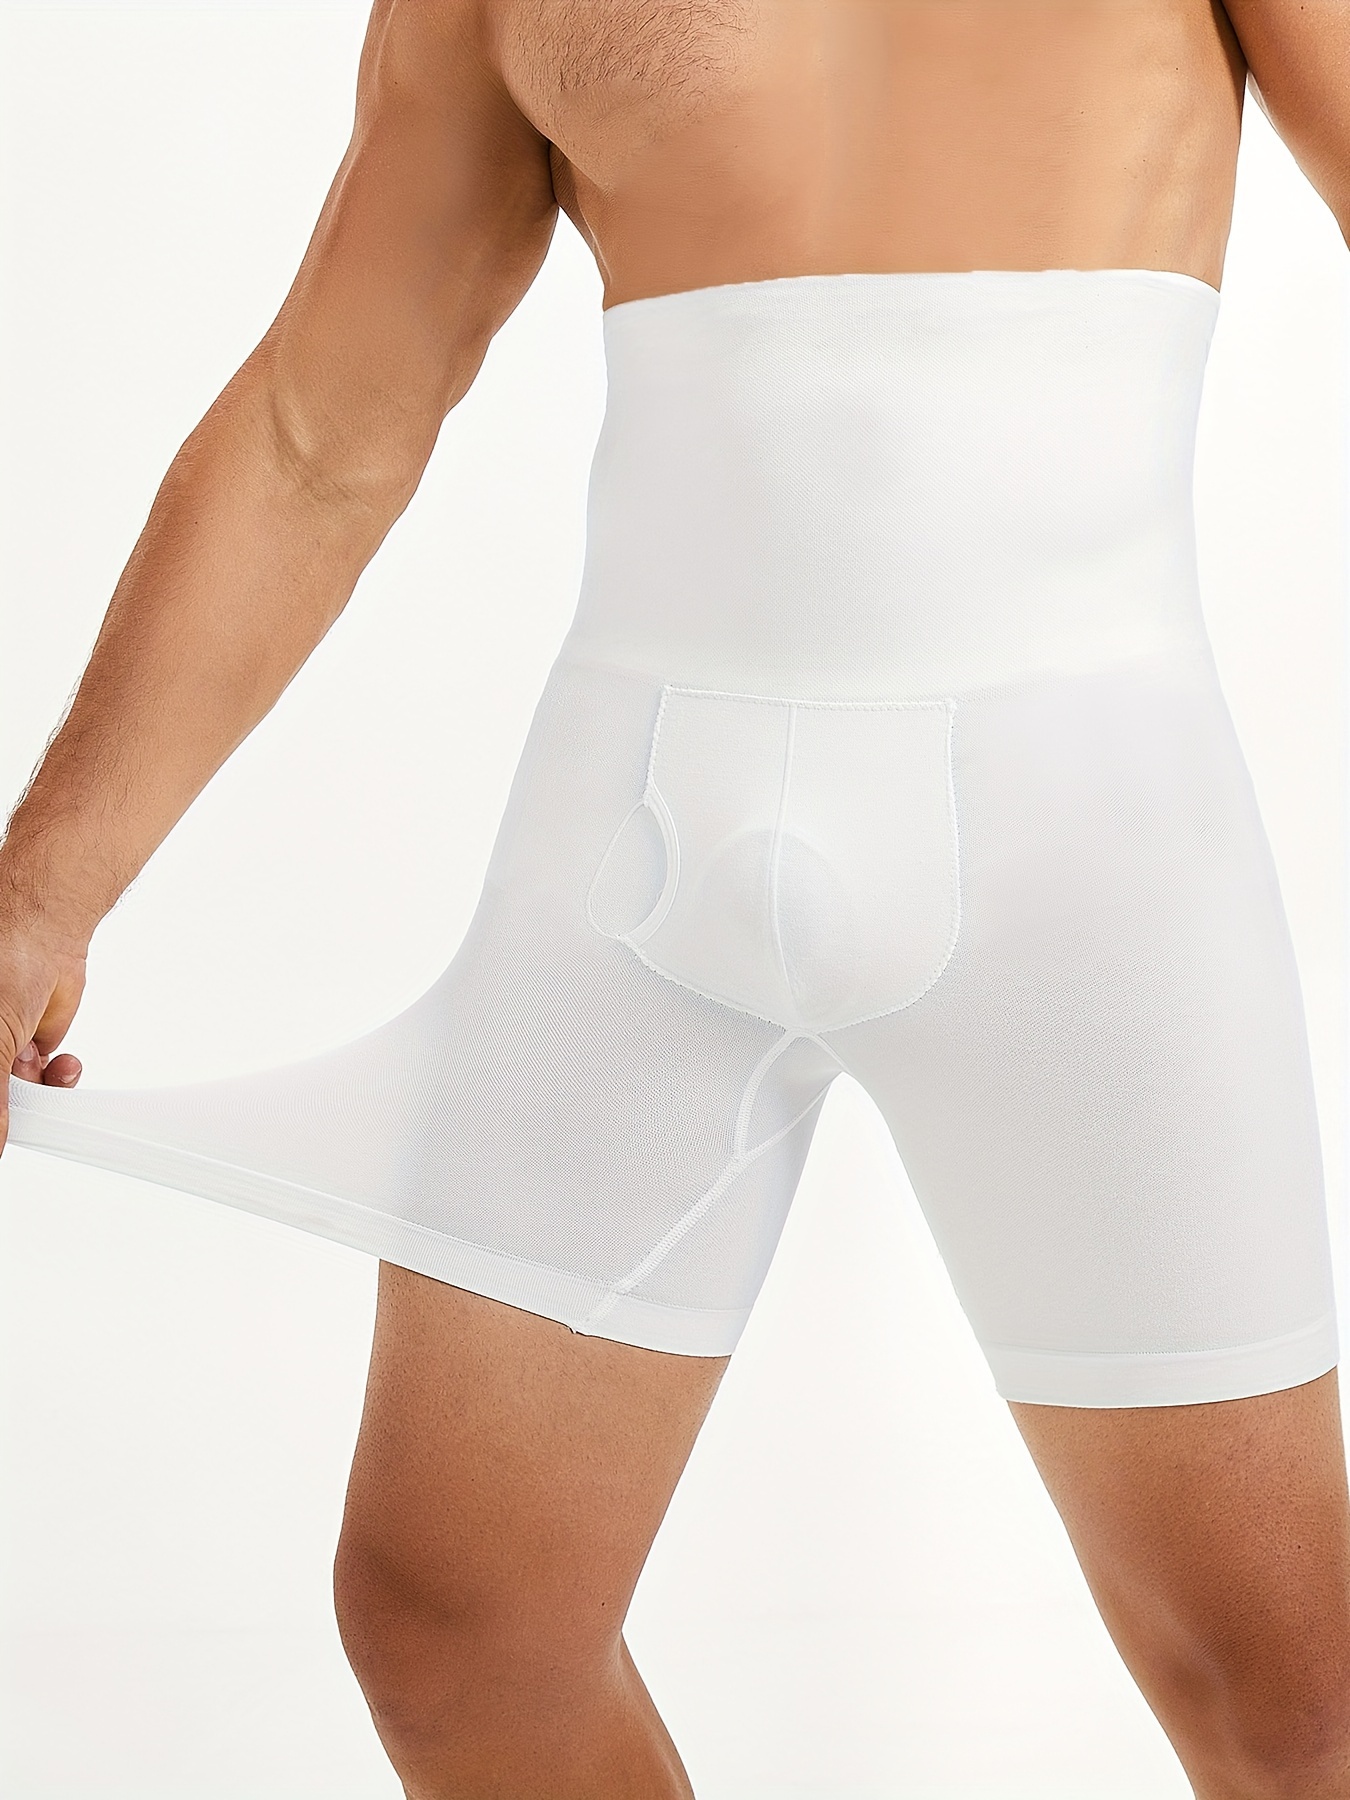 Men Tummy Control Shorts High Waist Slimming Shapewear Body Shaper